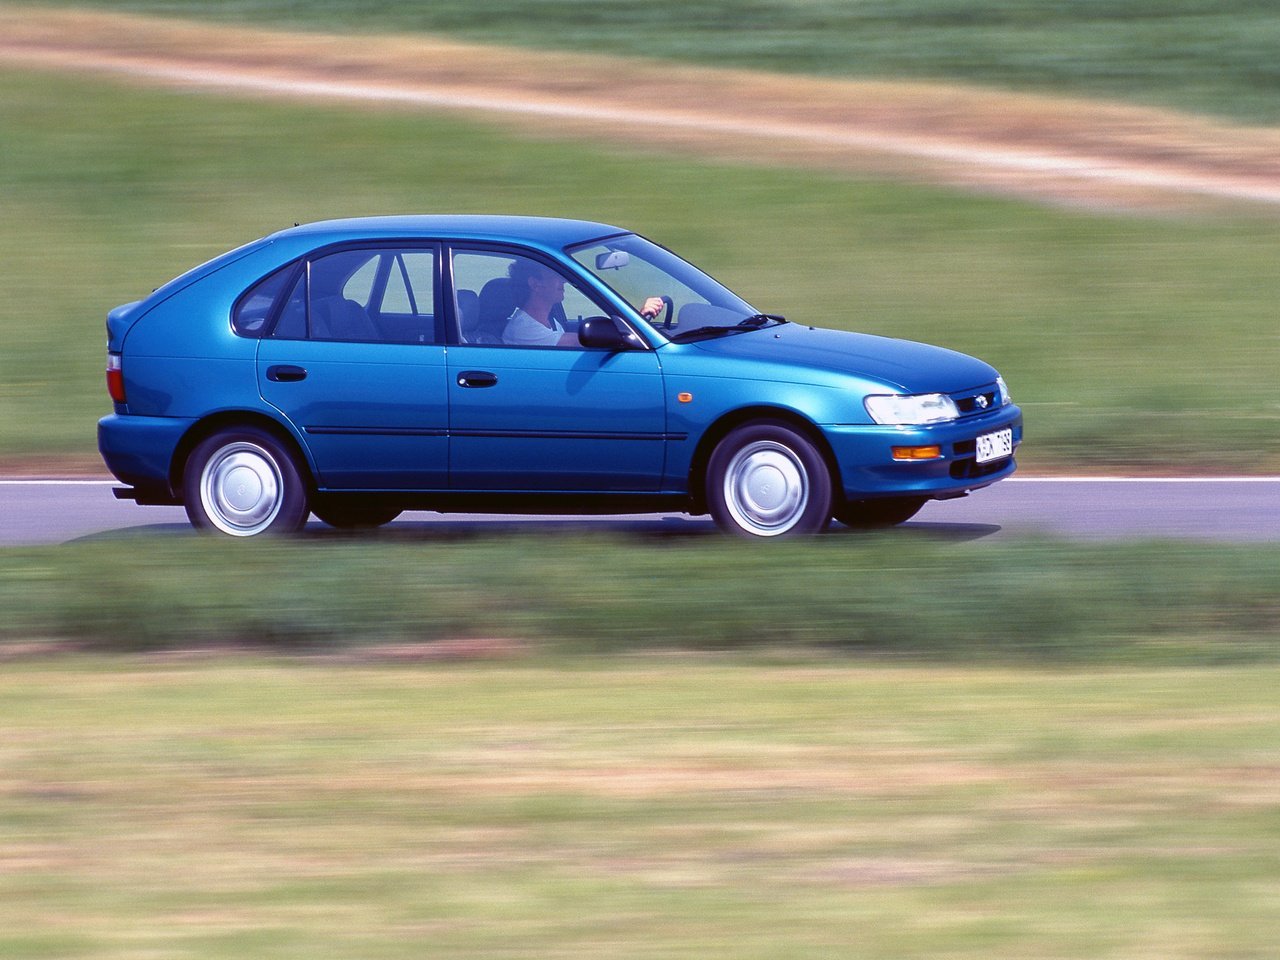 хэтчбек 5 дв. Liftback Toyota Corolla 1991 - 1997г выпуска модификация 1.3 MT (88 л.с.)